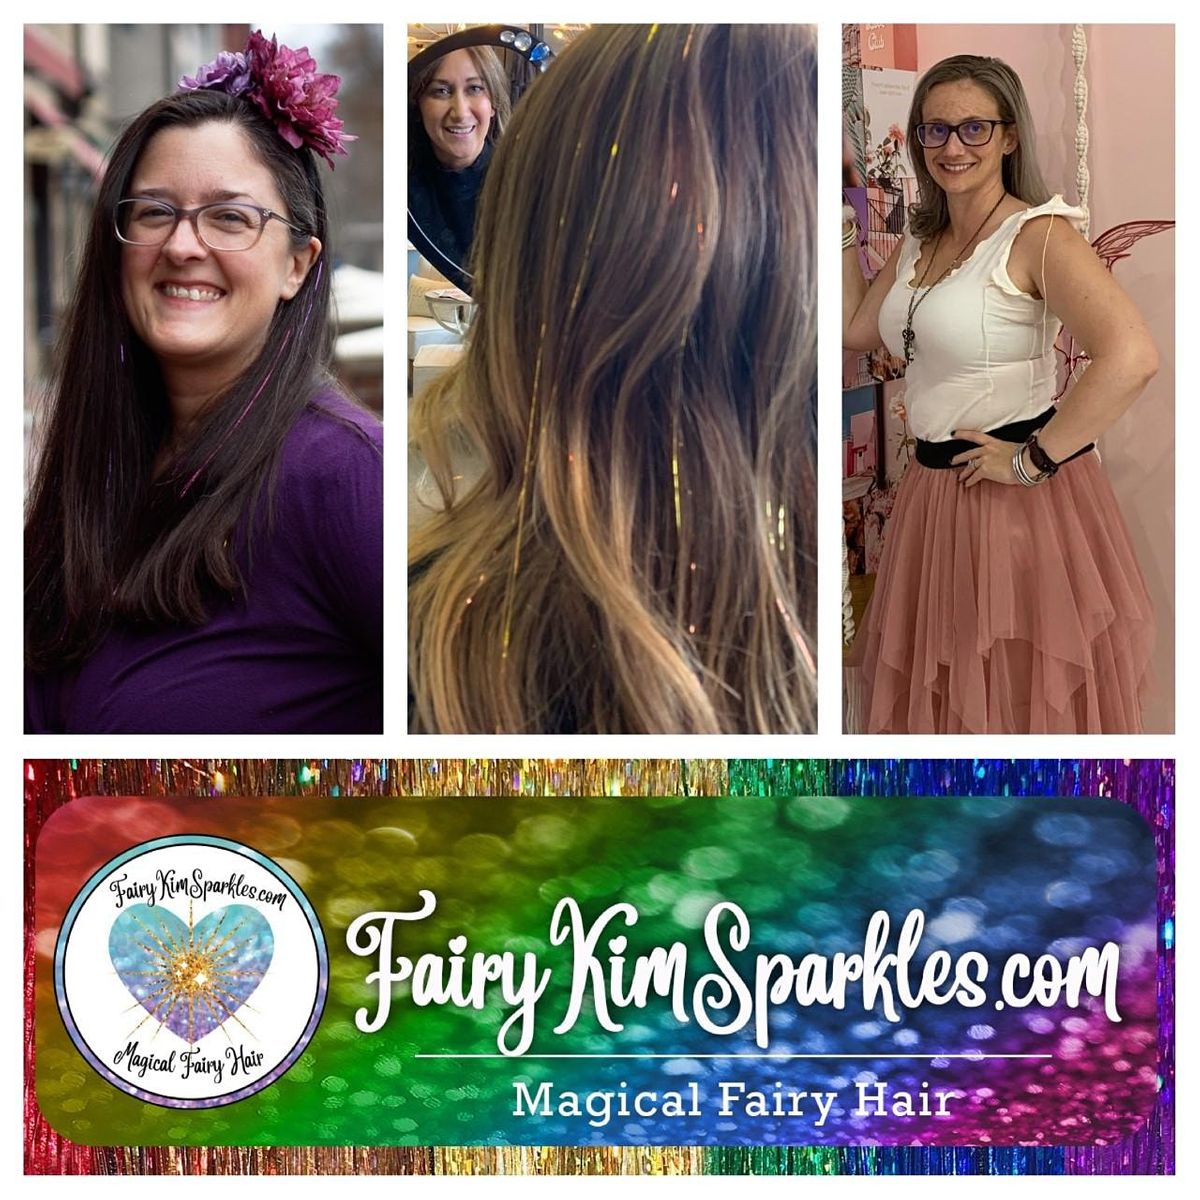 FairyKimSparkles.com Magical Fairy Hair at Scout & Molly's Charlotte